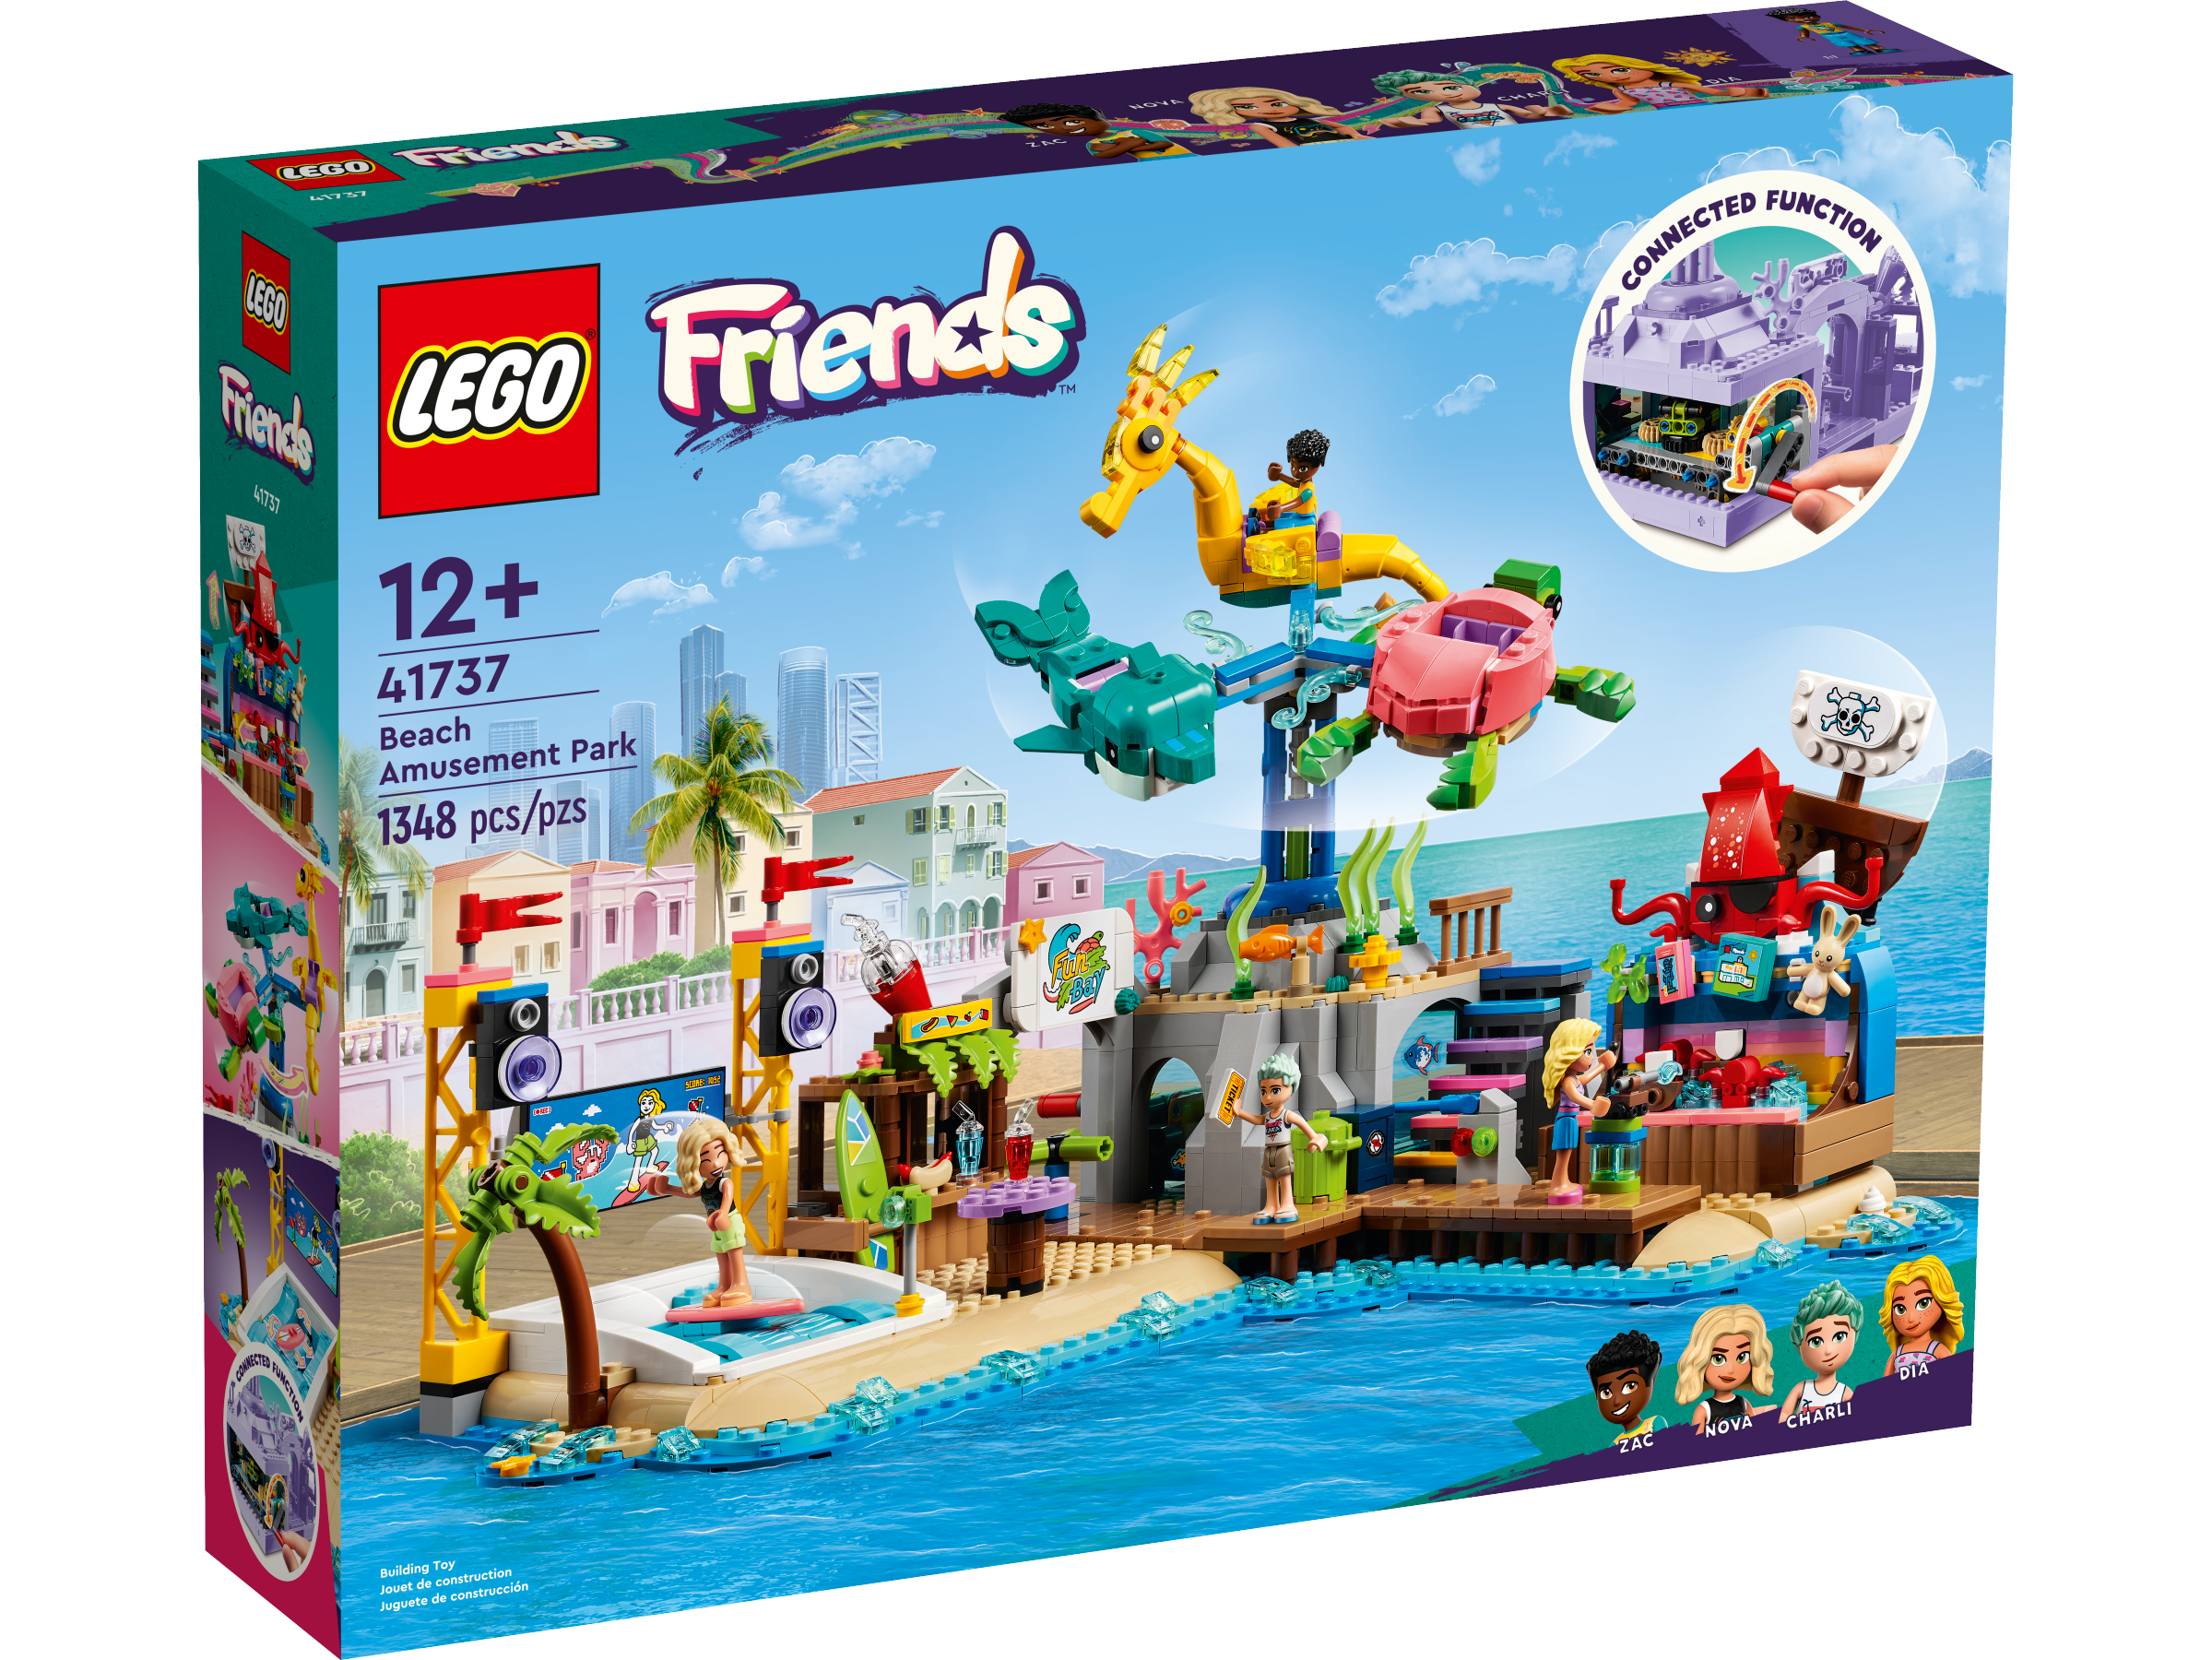 Beach Amusement Park 41737 | Friends | Buy online at the Official